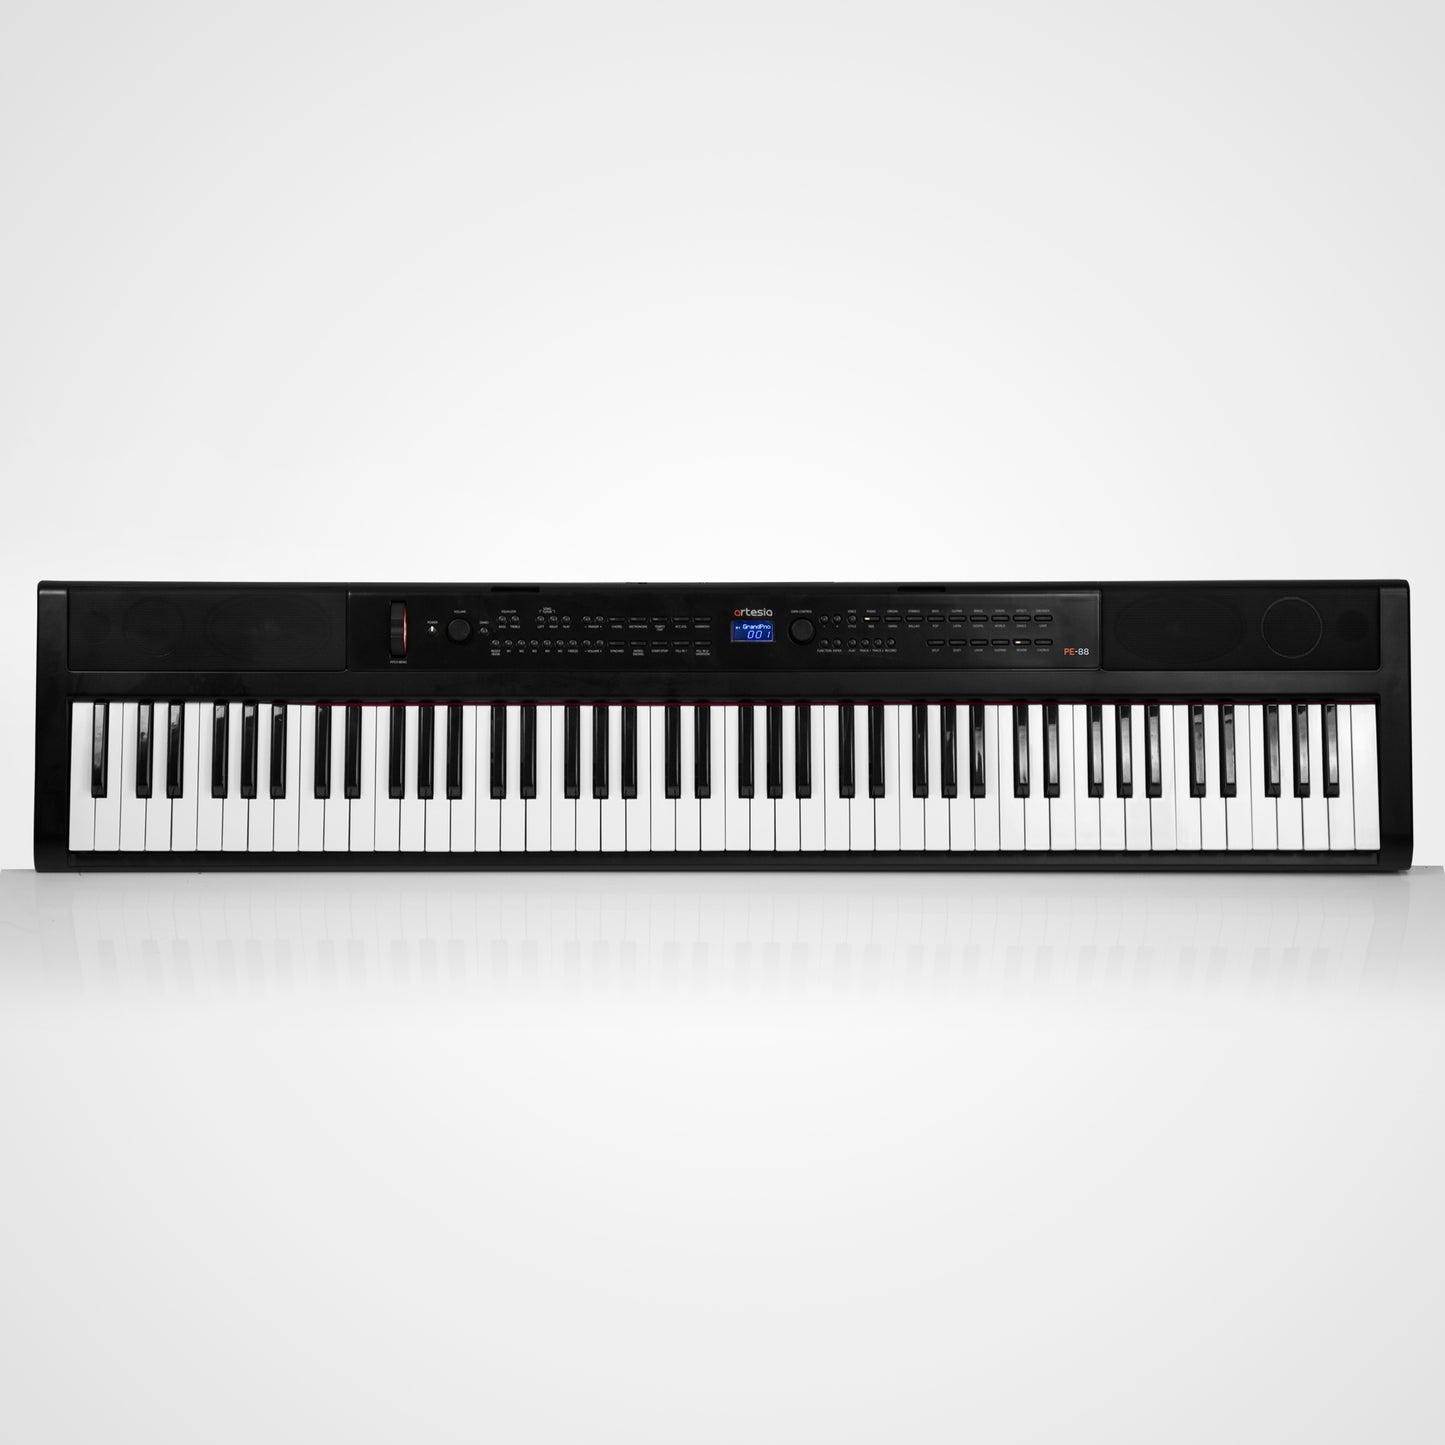 Artesia PE88 88鍵 伴奏電鋼琴 半重琴鍵